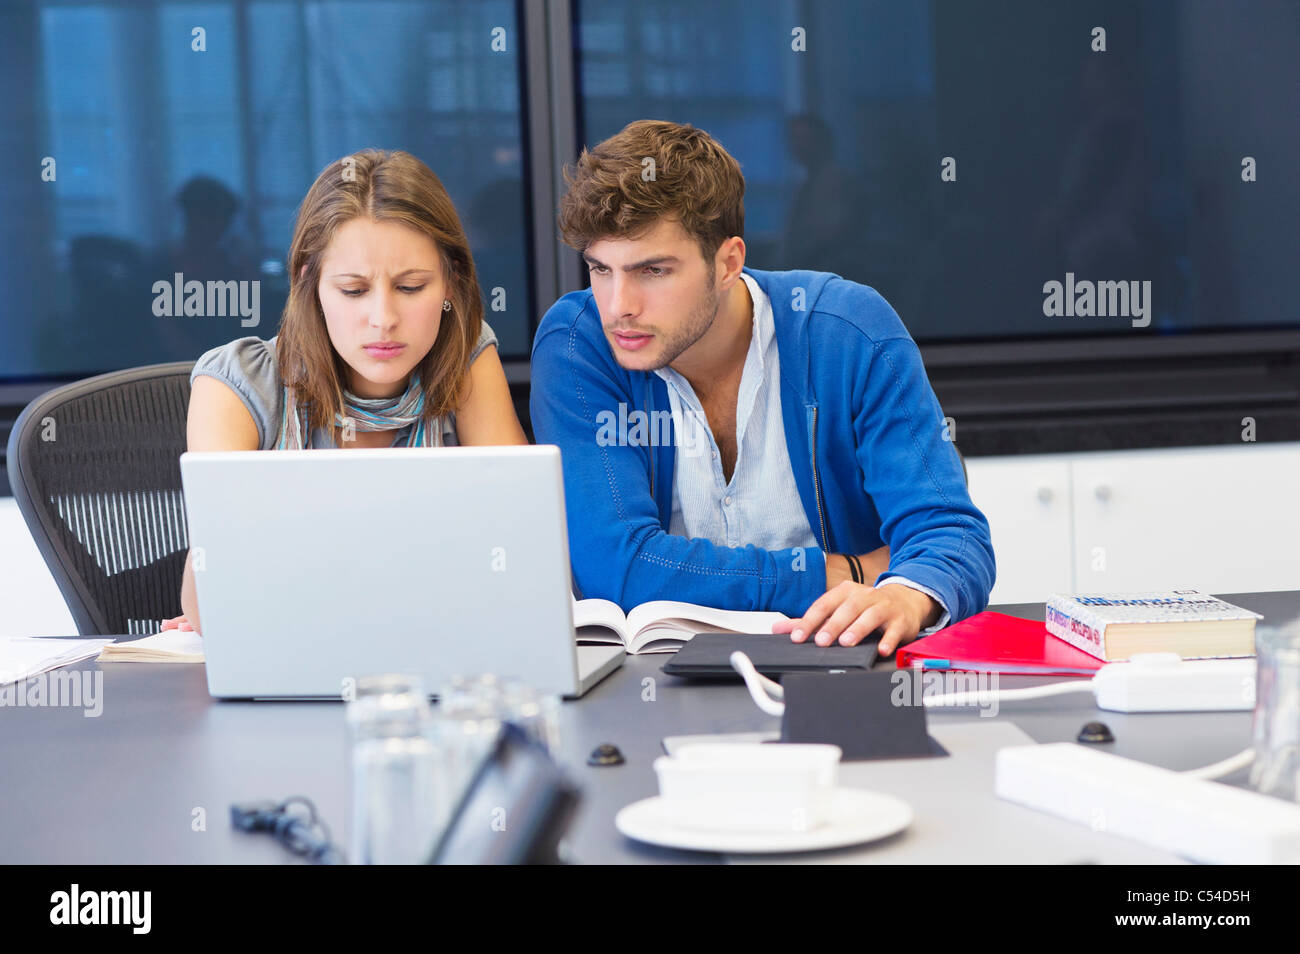 University students using laptop in classroom Stock Photo